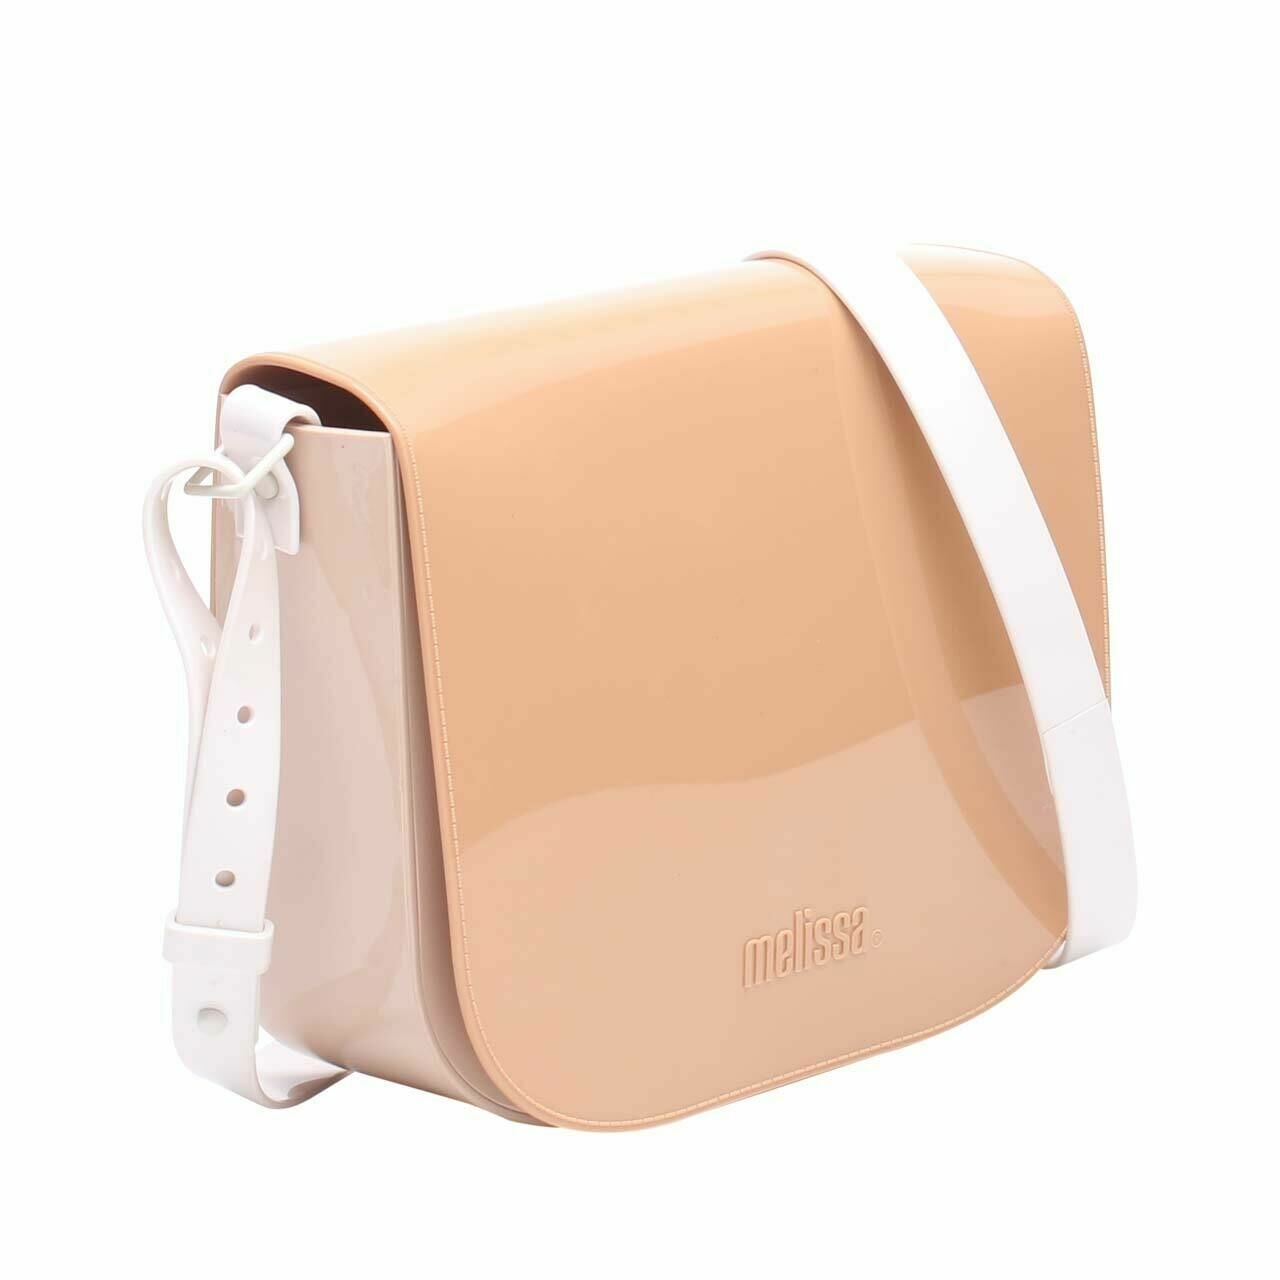 Melissa Essential Beige/White Sling Bag